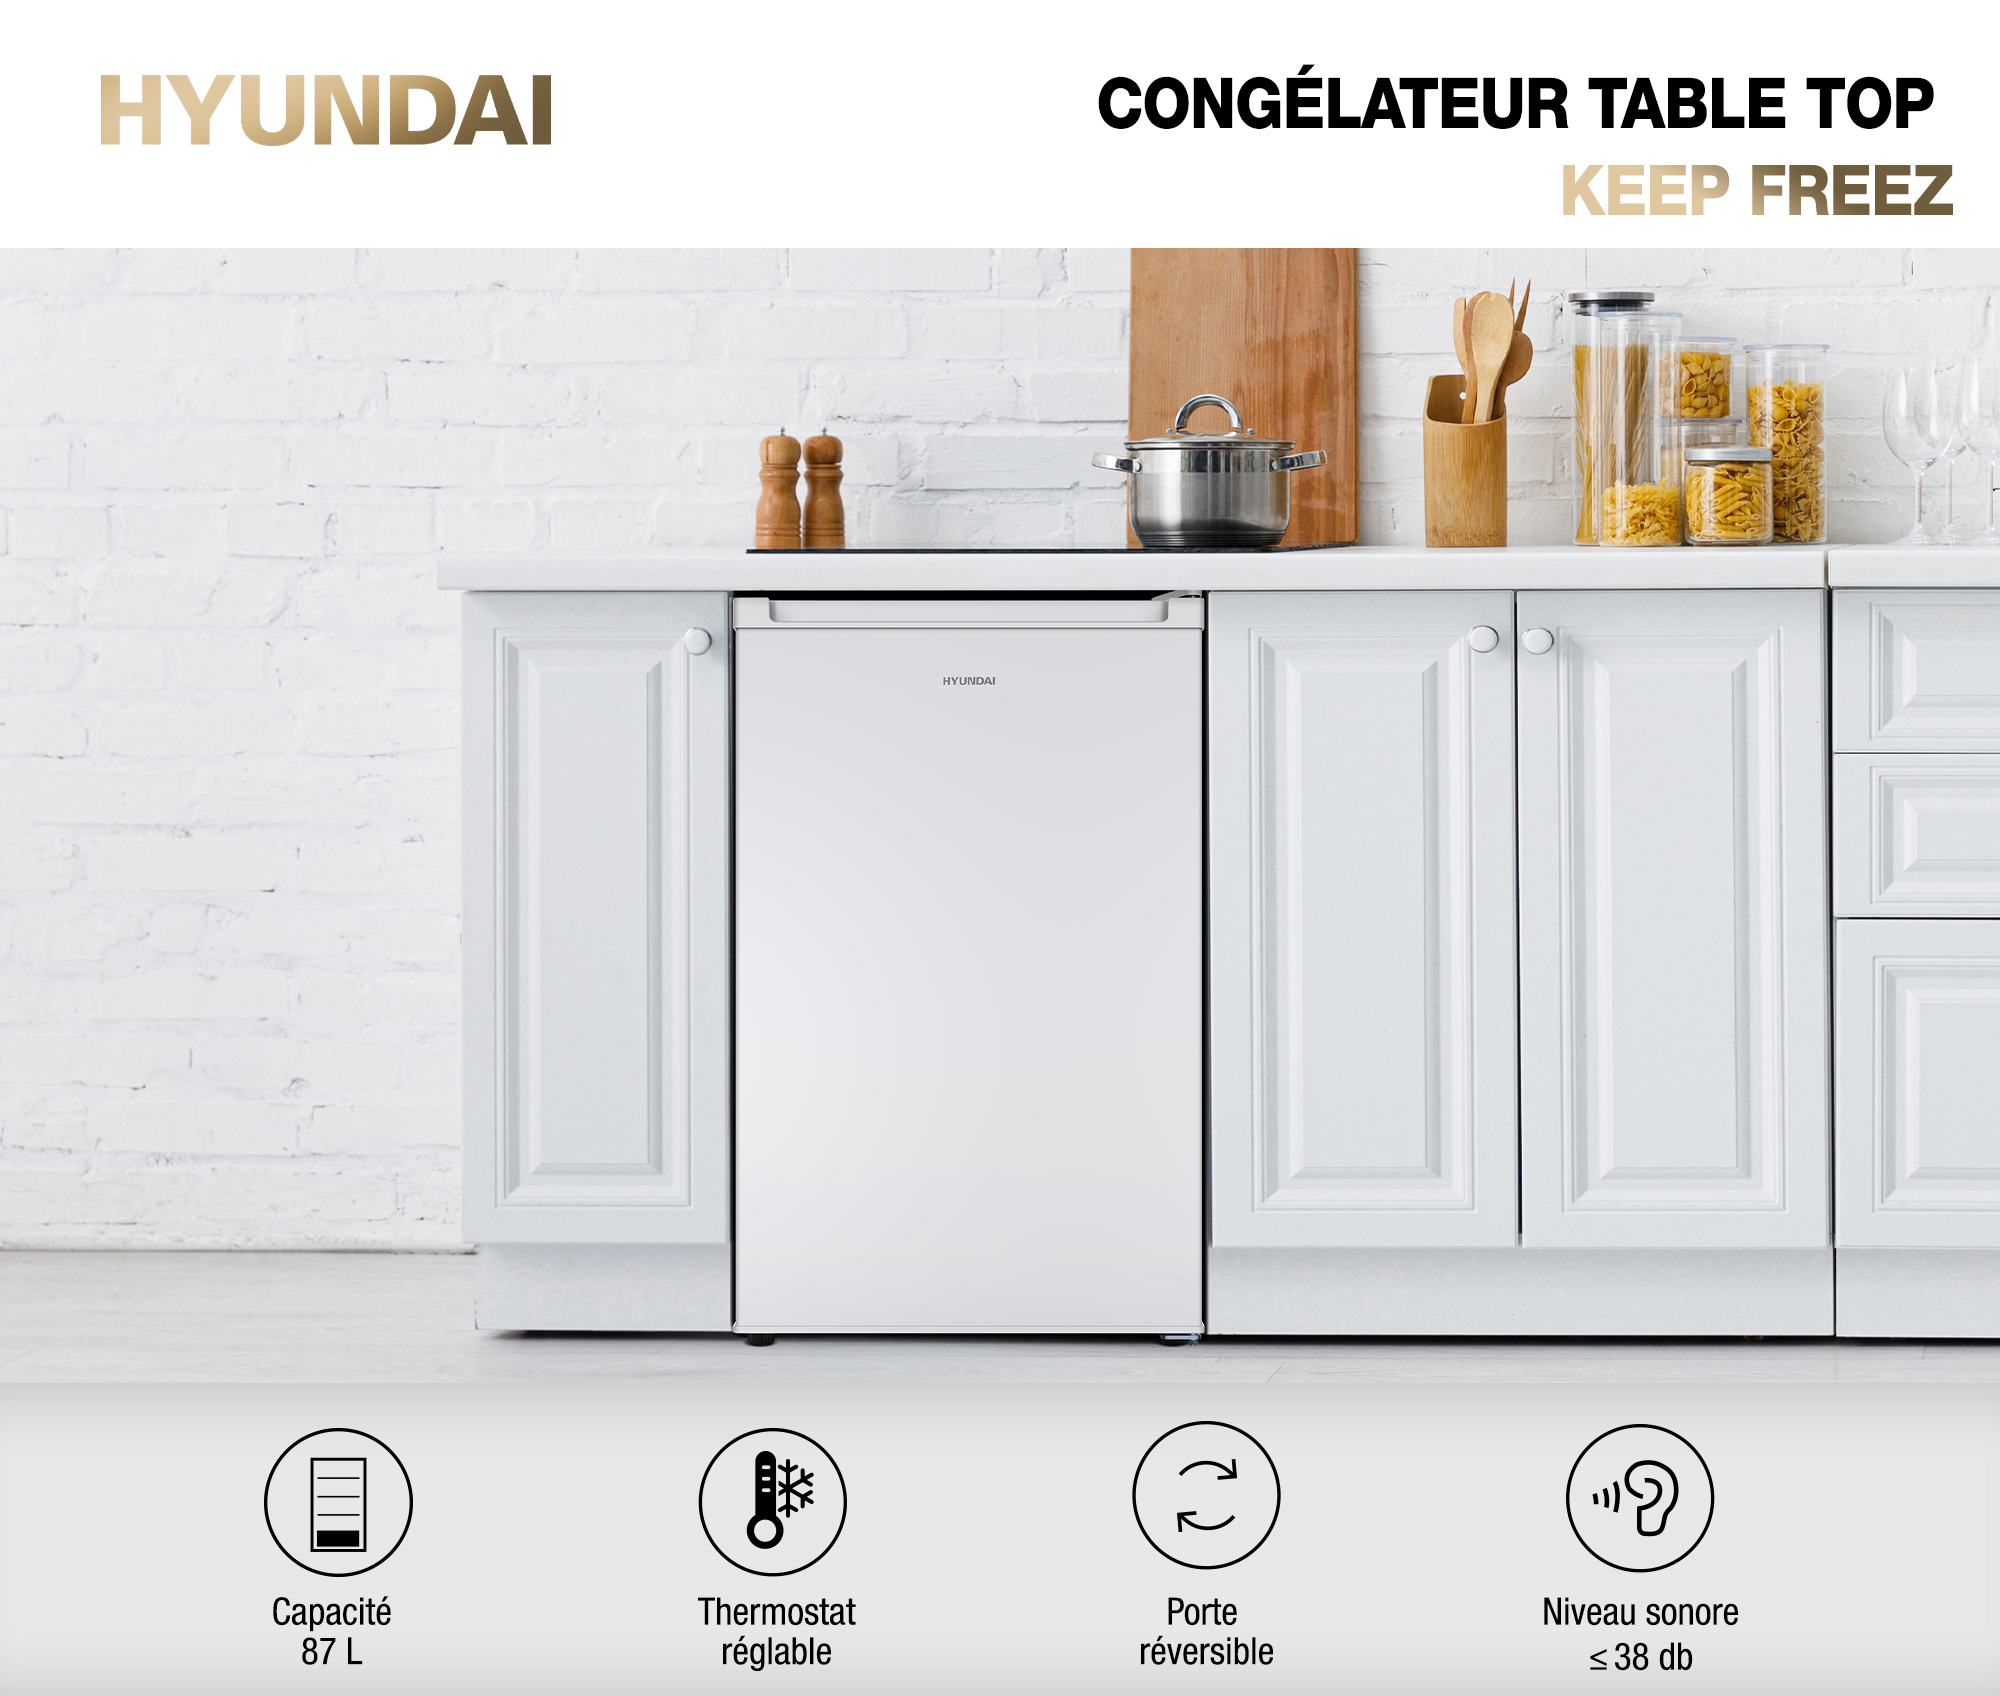 Congélateur table top HYUNDAI HY-CLG87WS-001 87L